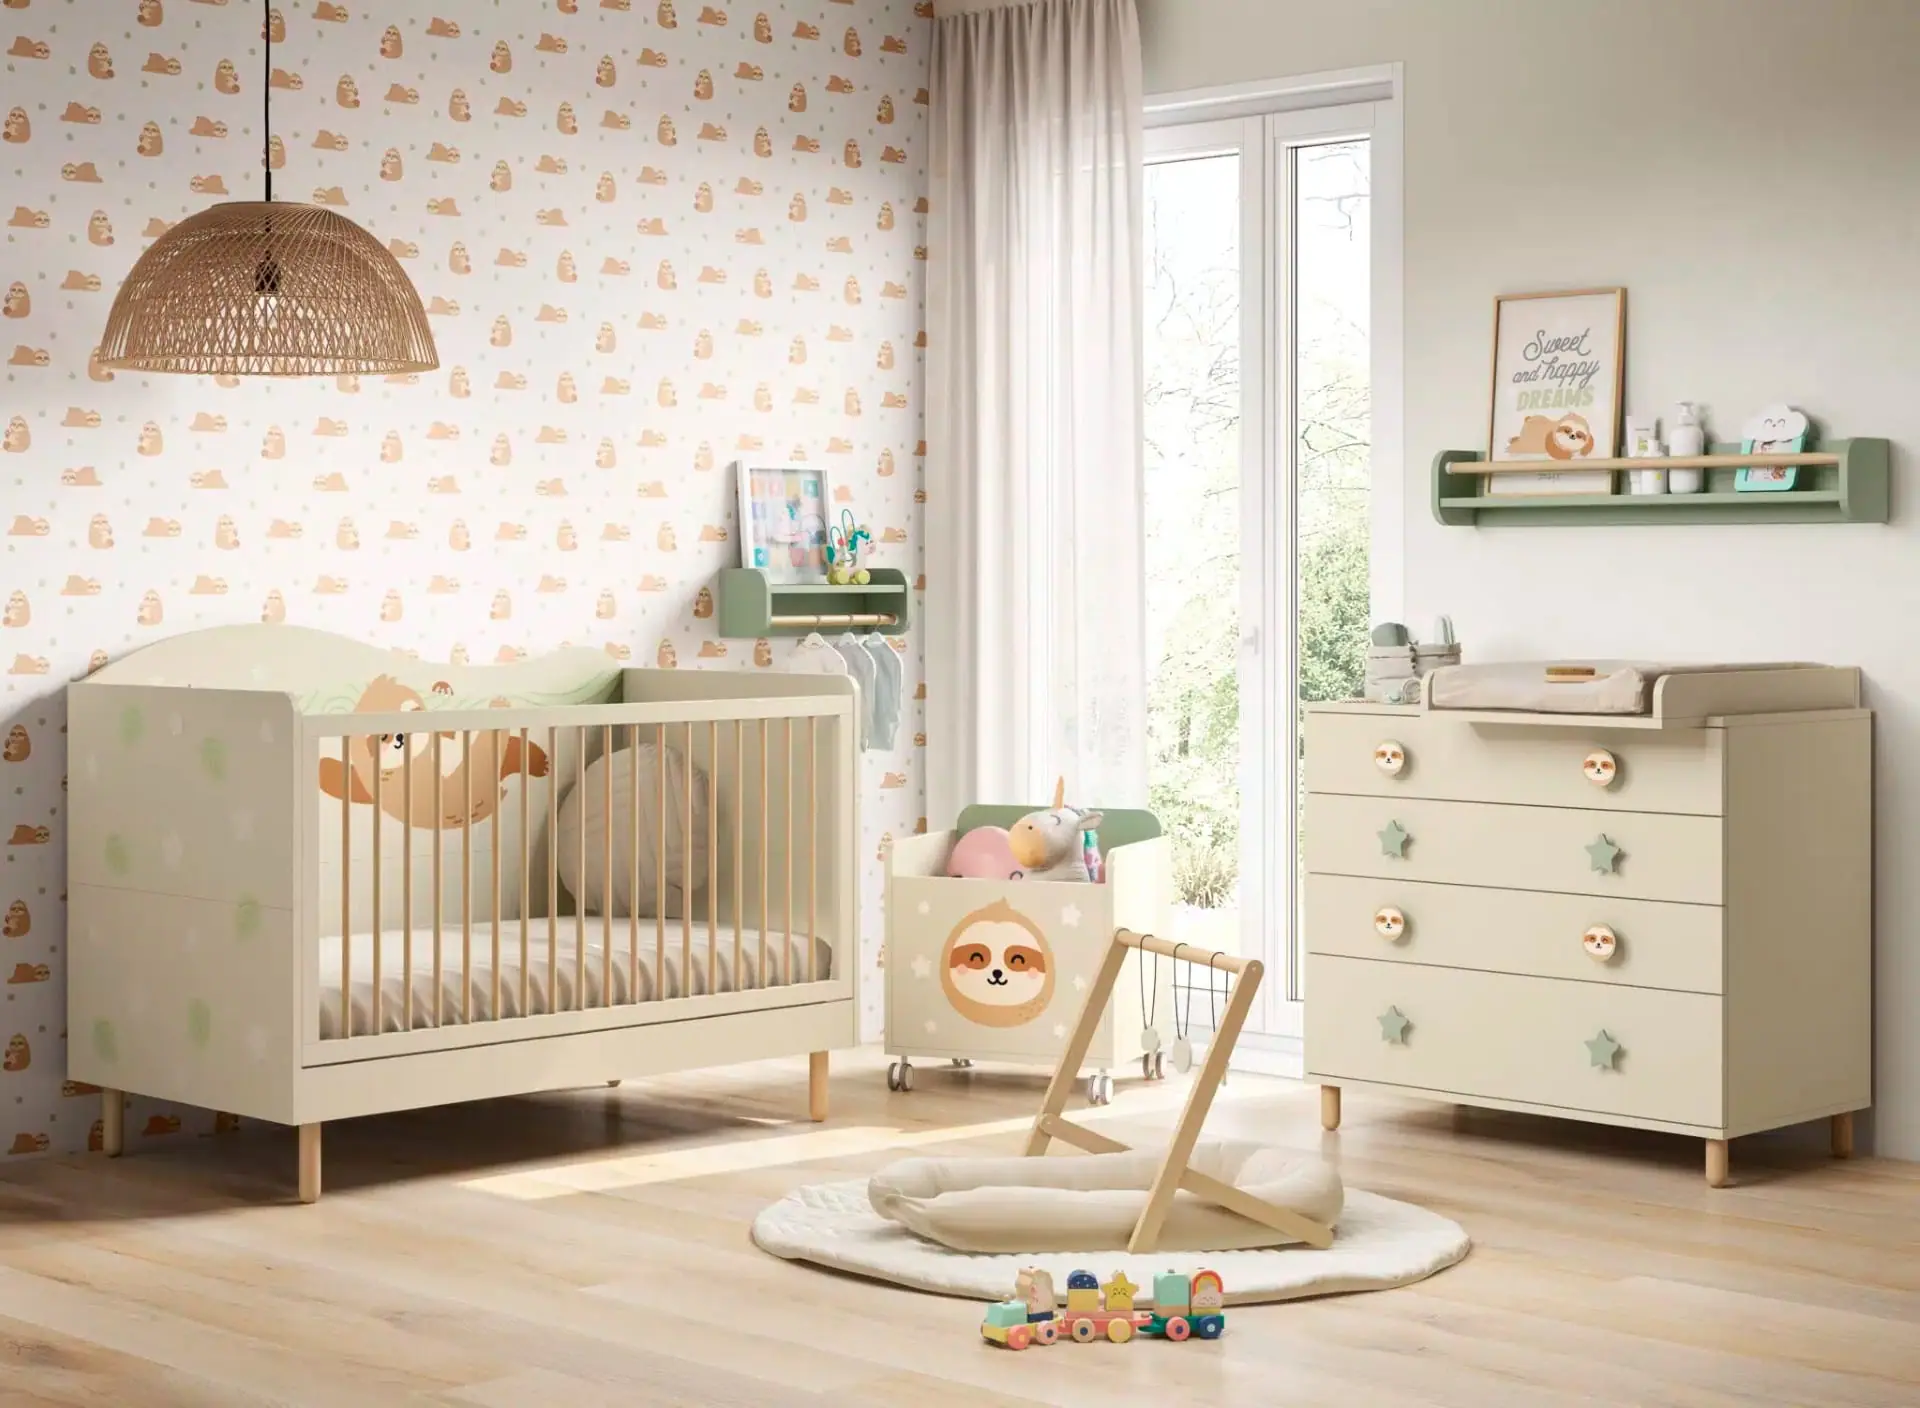 ros-mr-wonderful-baby-furniture03